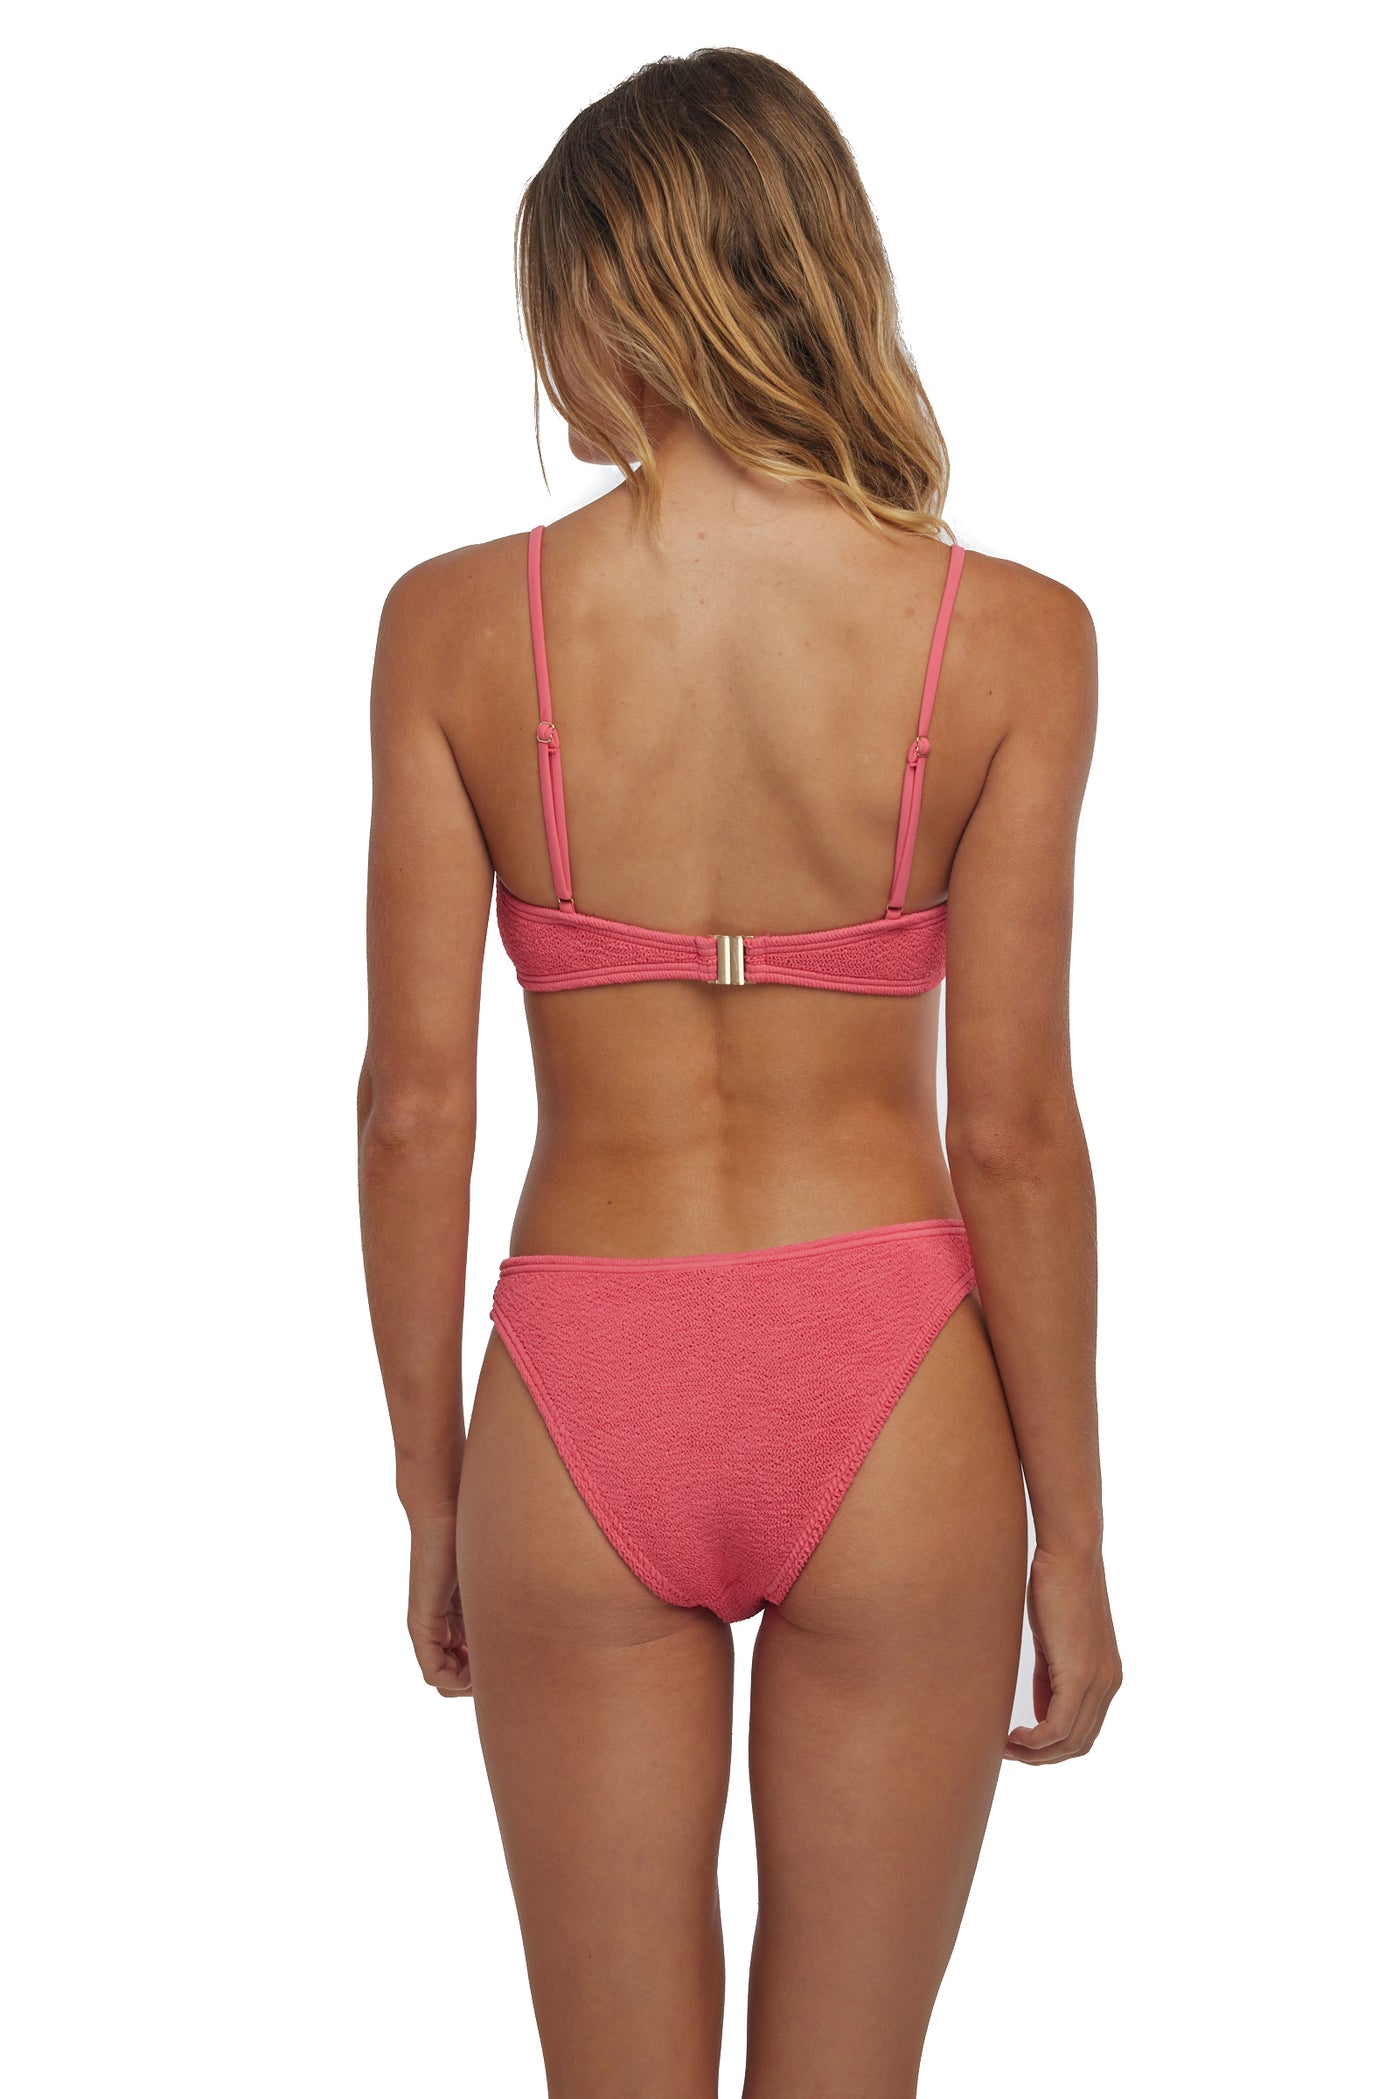 Laguna Beach Front Wrap One Size Bikini TOP ONLY (Calypso Coral)